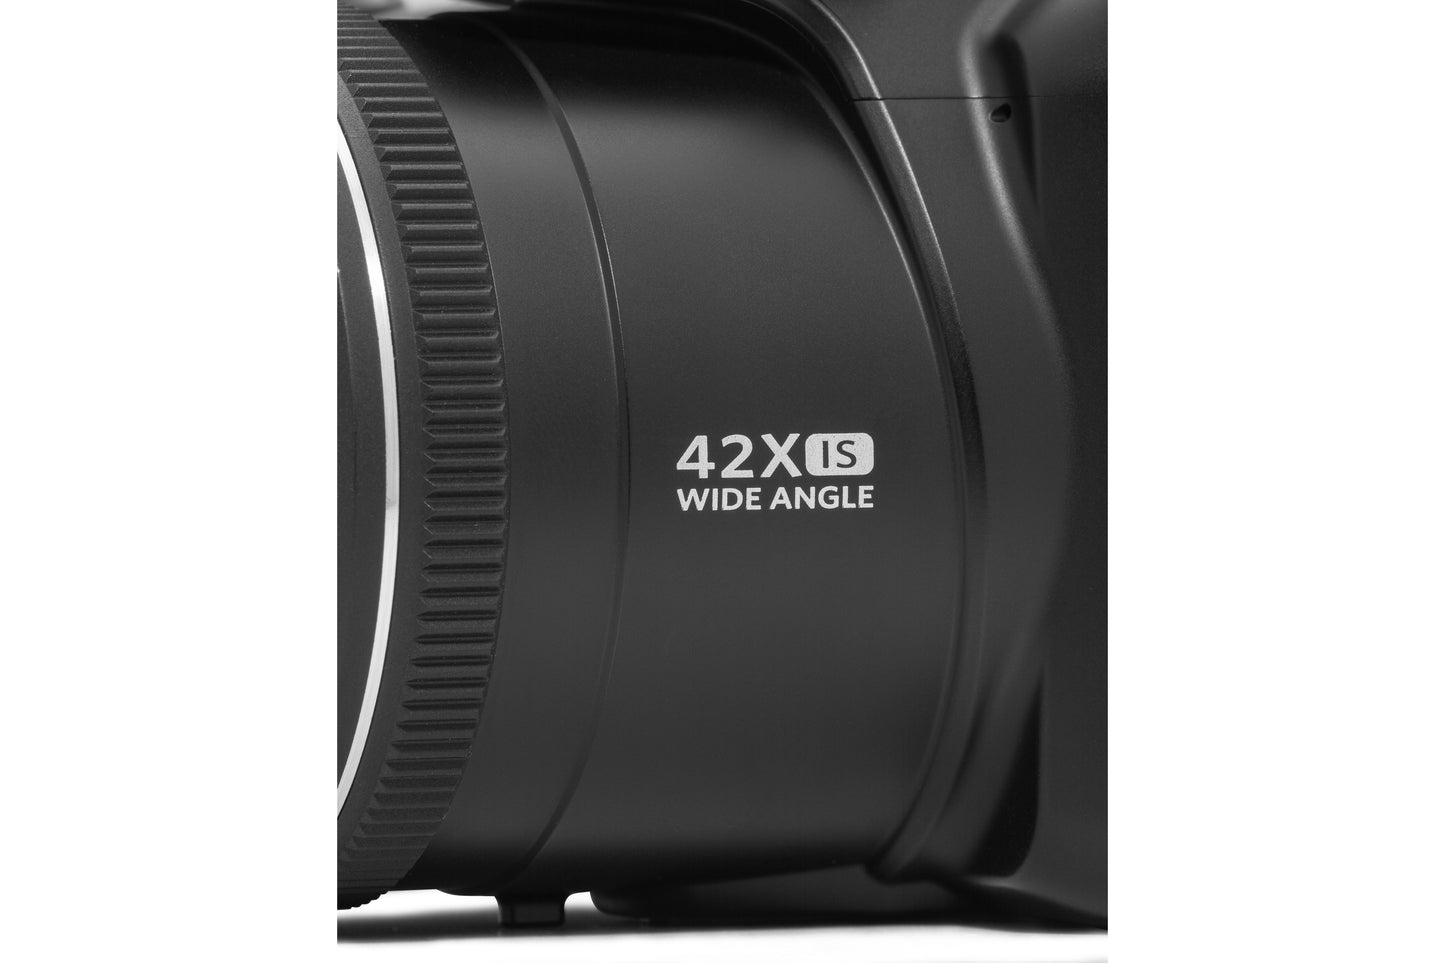 Kodak PIXPRO AZ425 Astro 20MP 42x Zoom Bridge Camera - Black - maplin.co.uk